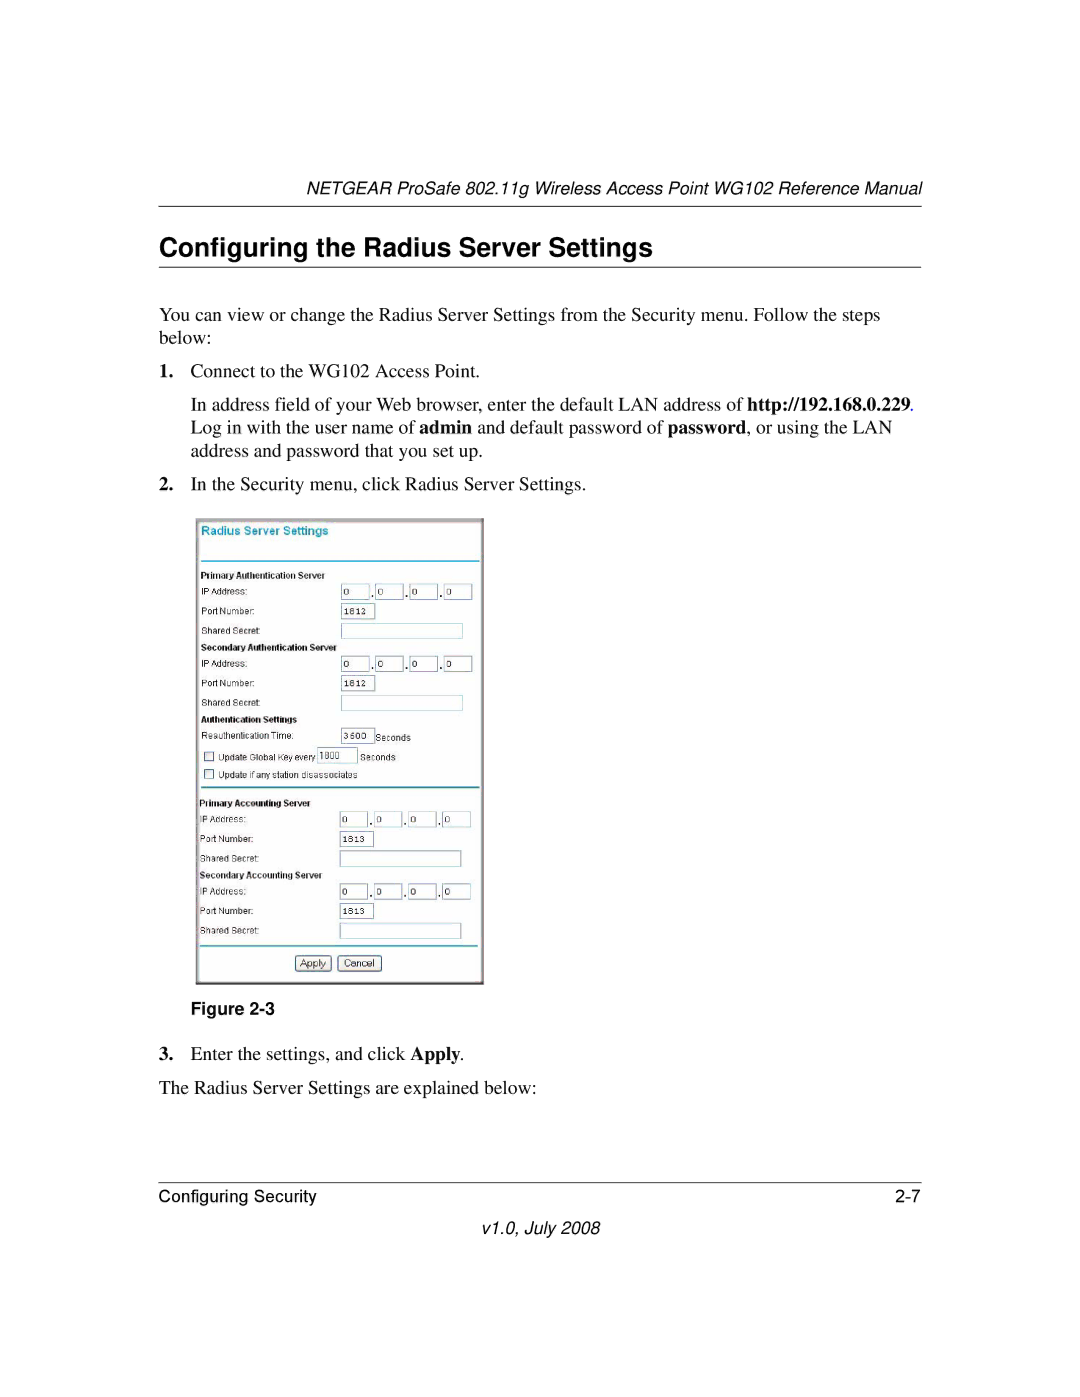 NETGEAR WG102NA manual Configuring the Radius Server Settings 